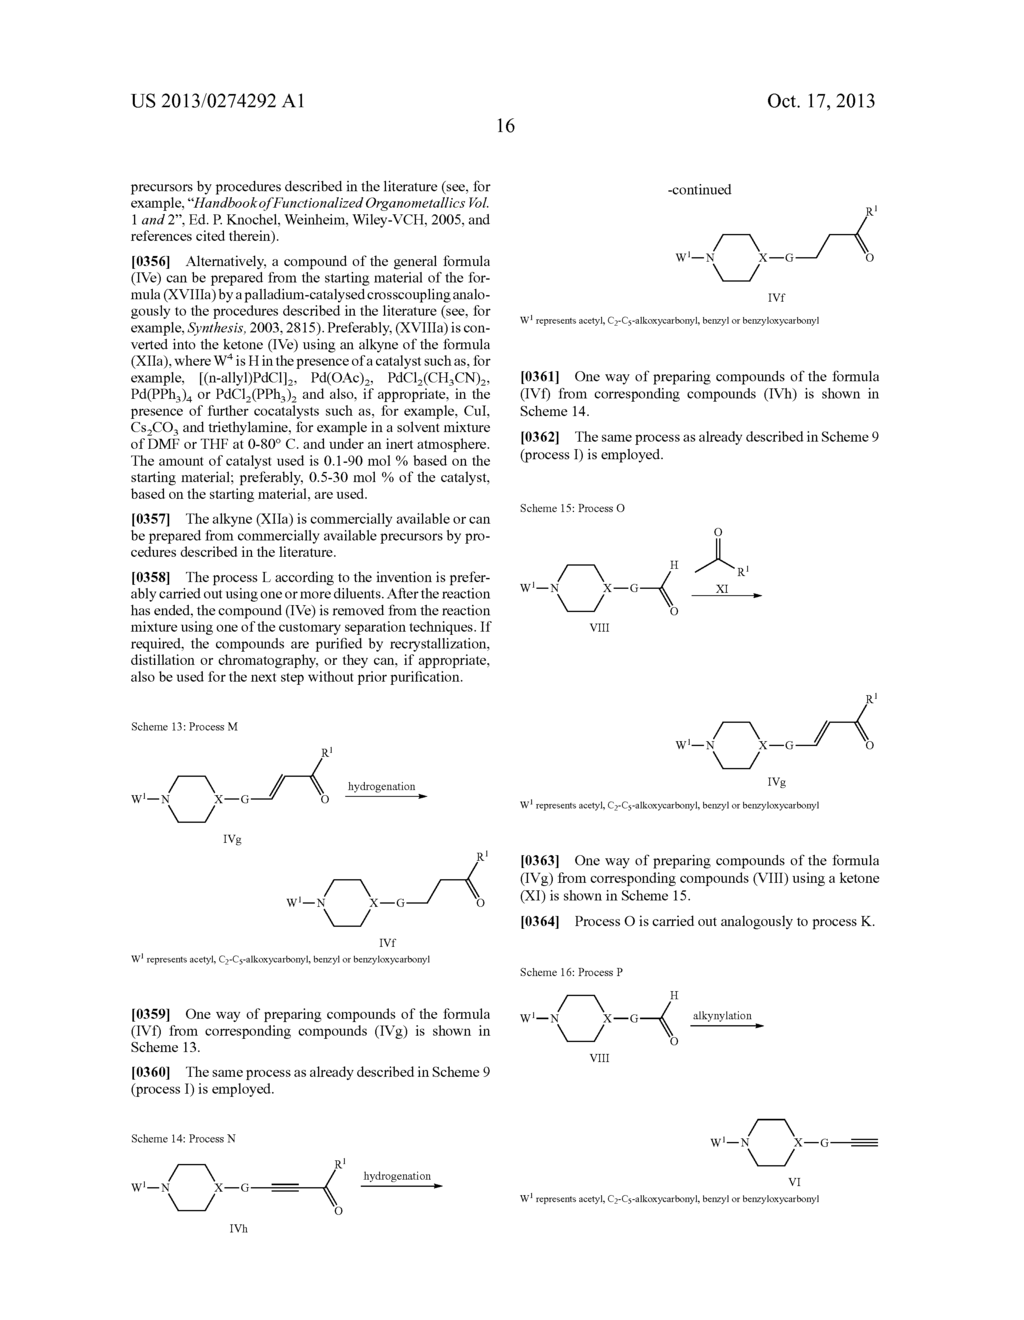 Ketoheteroarylpiperdine and -Piperazine Derivatives as Fungicides - diagram, schematic, and image 17